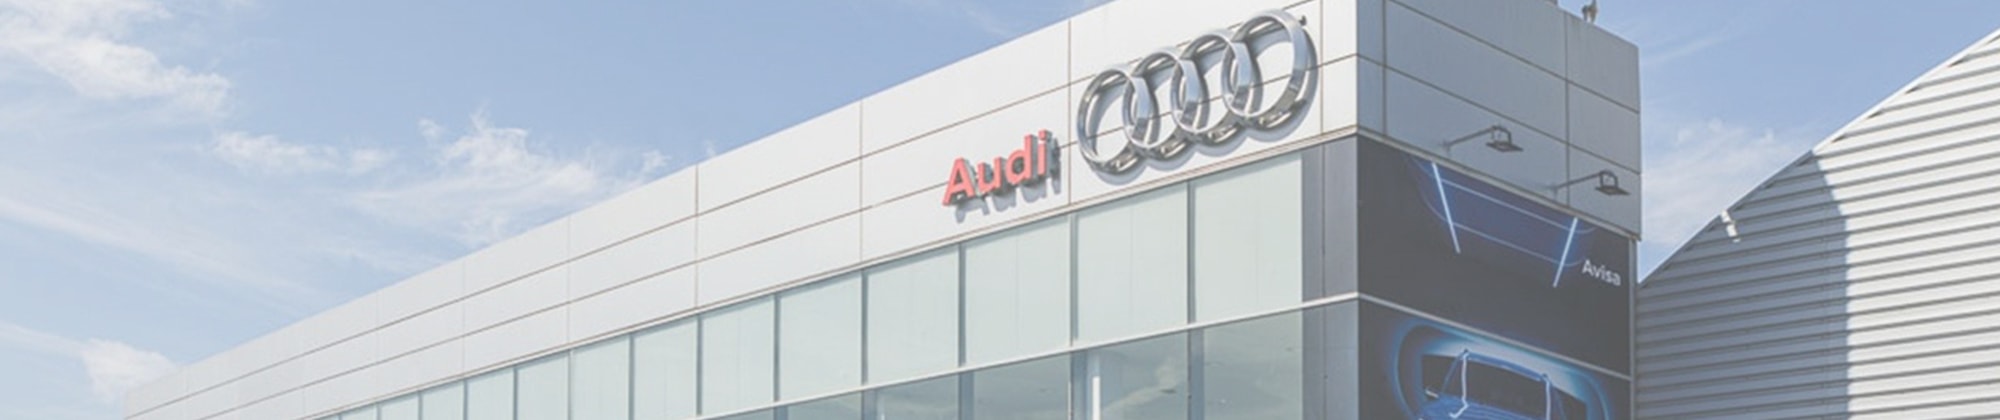 Home Avisa Audi